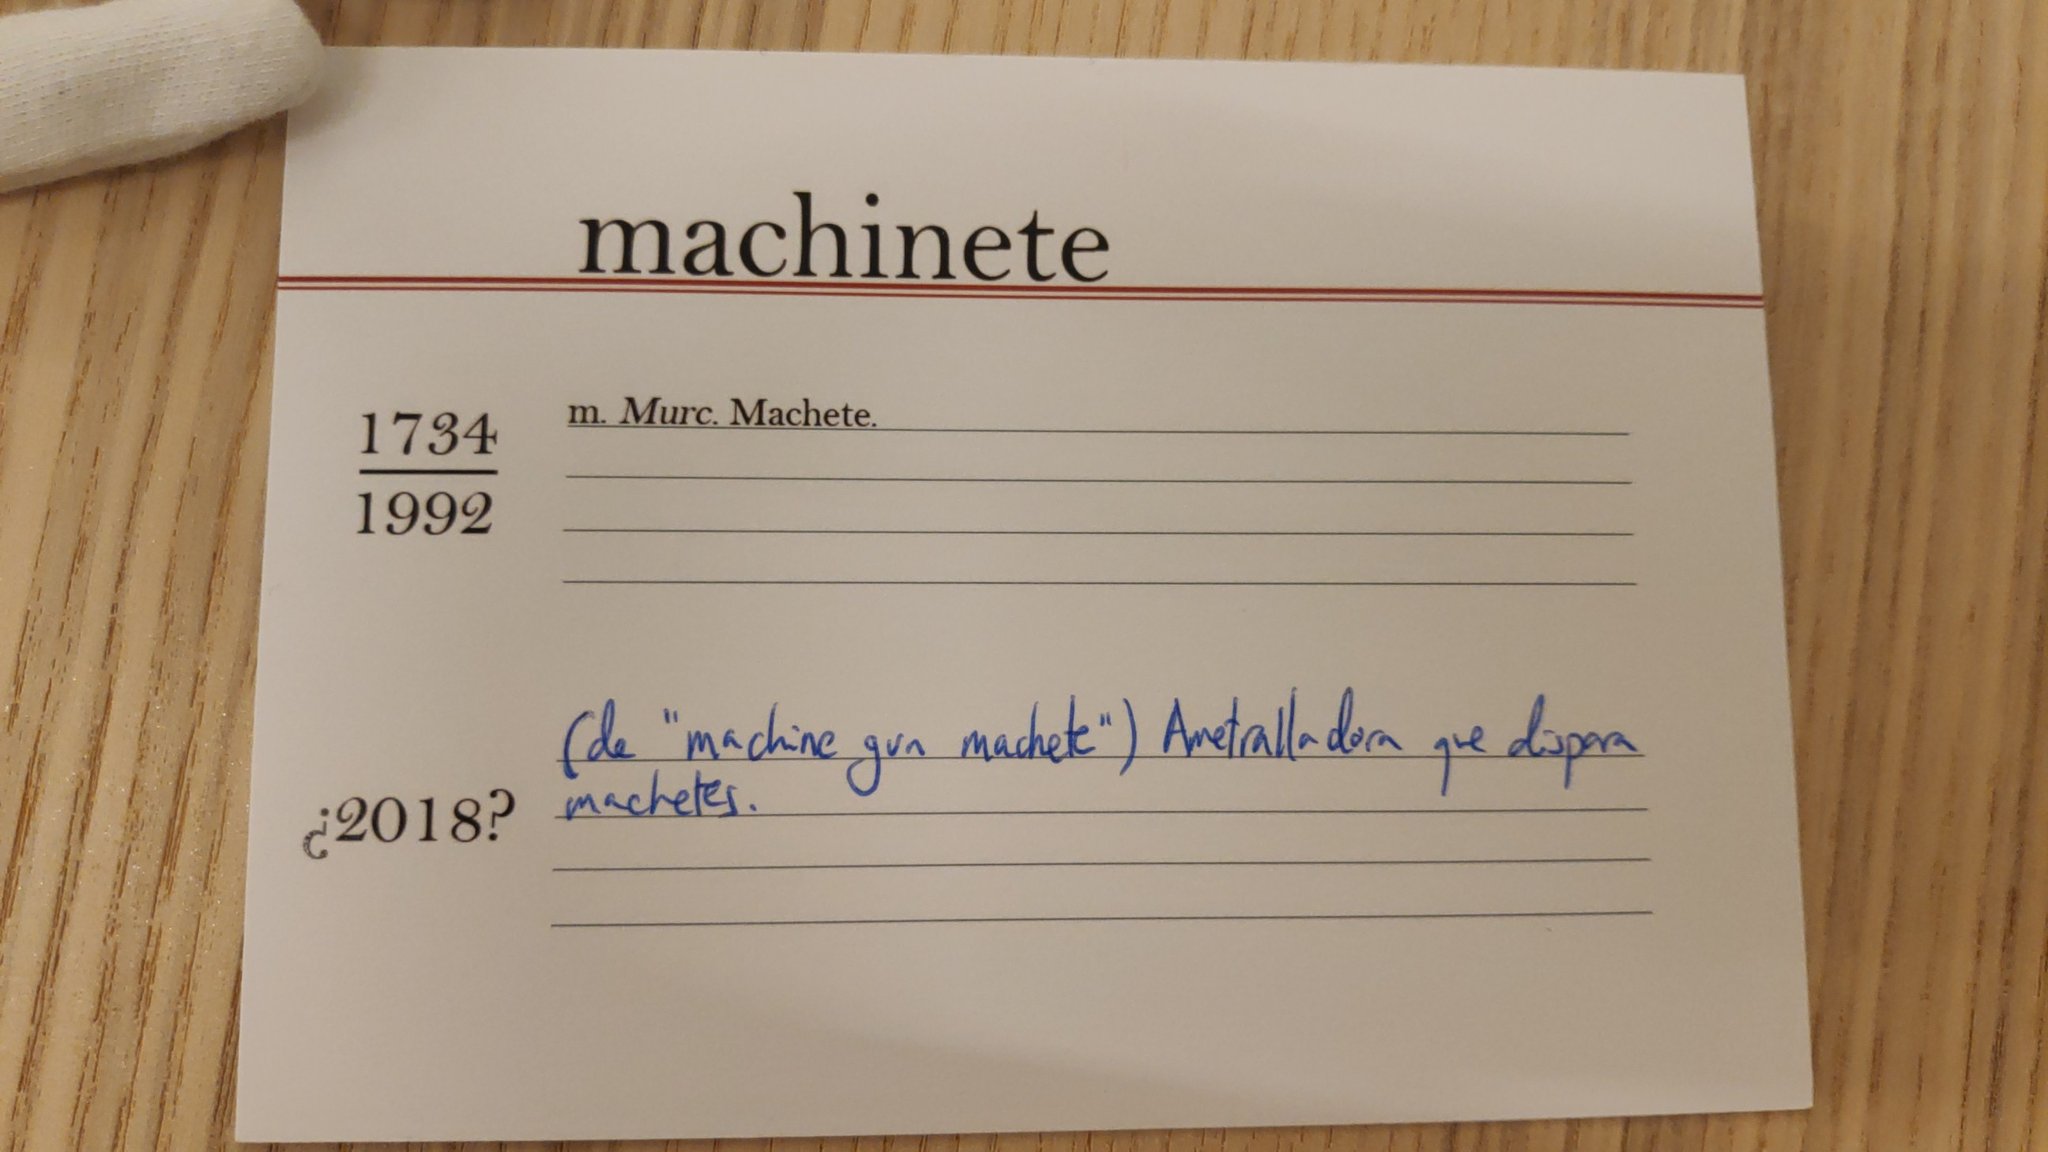 "1734: Machinete (Murcia): Machete. ¿2018?: (de "machine gun machete"): Ametralladora que dispara machetes."